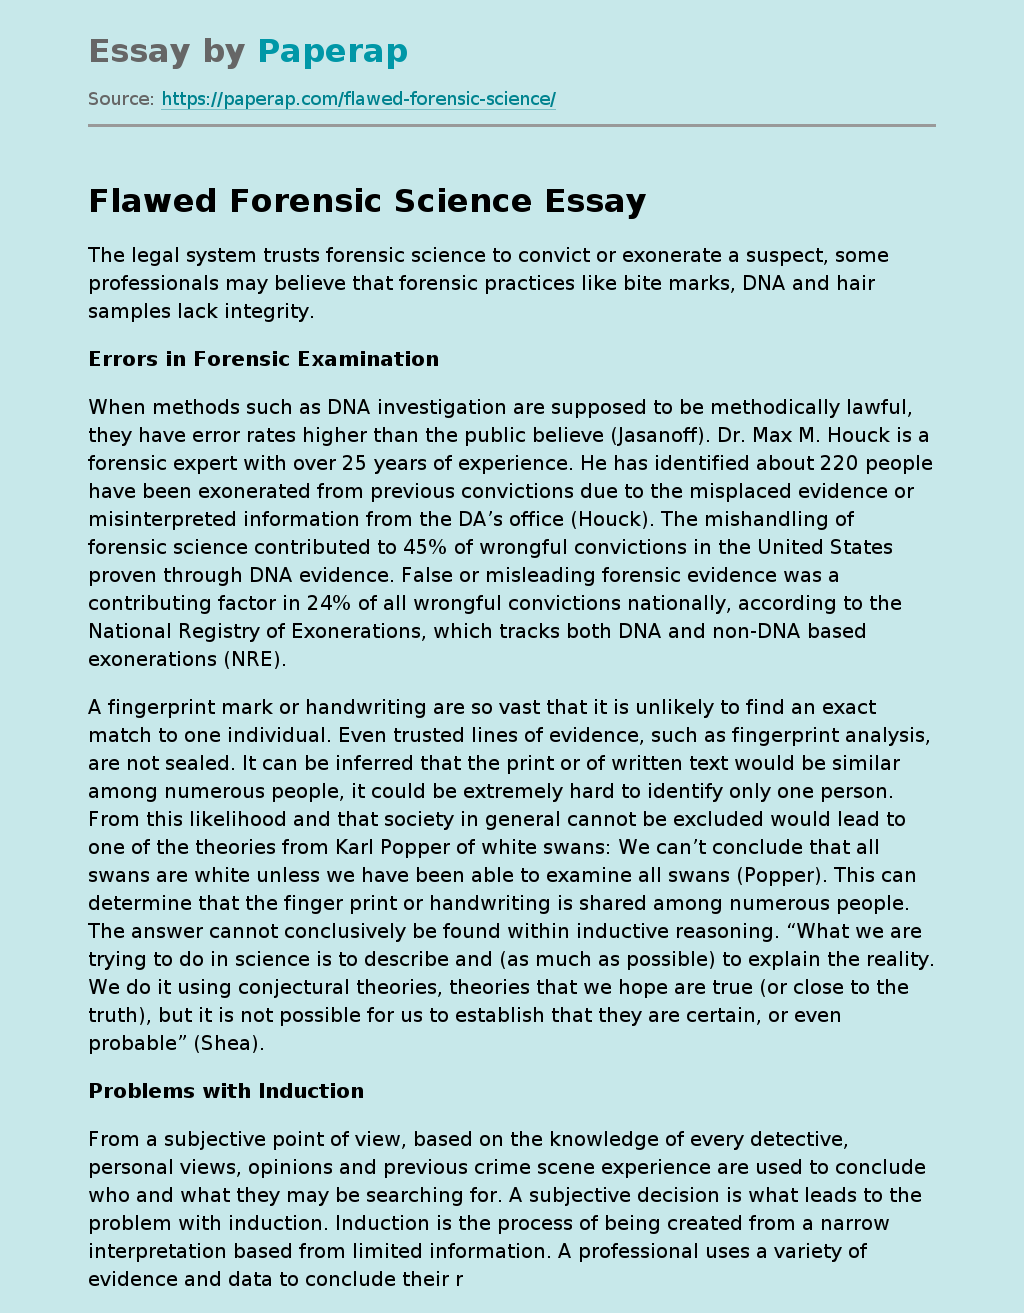 Flawed Forensic Science